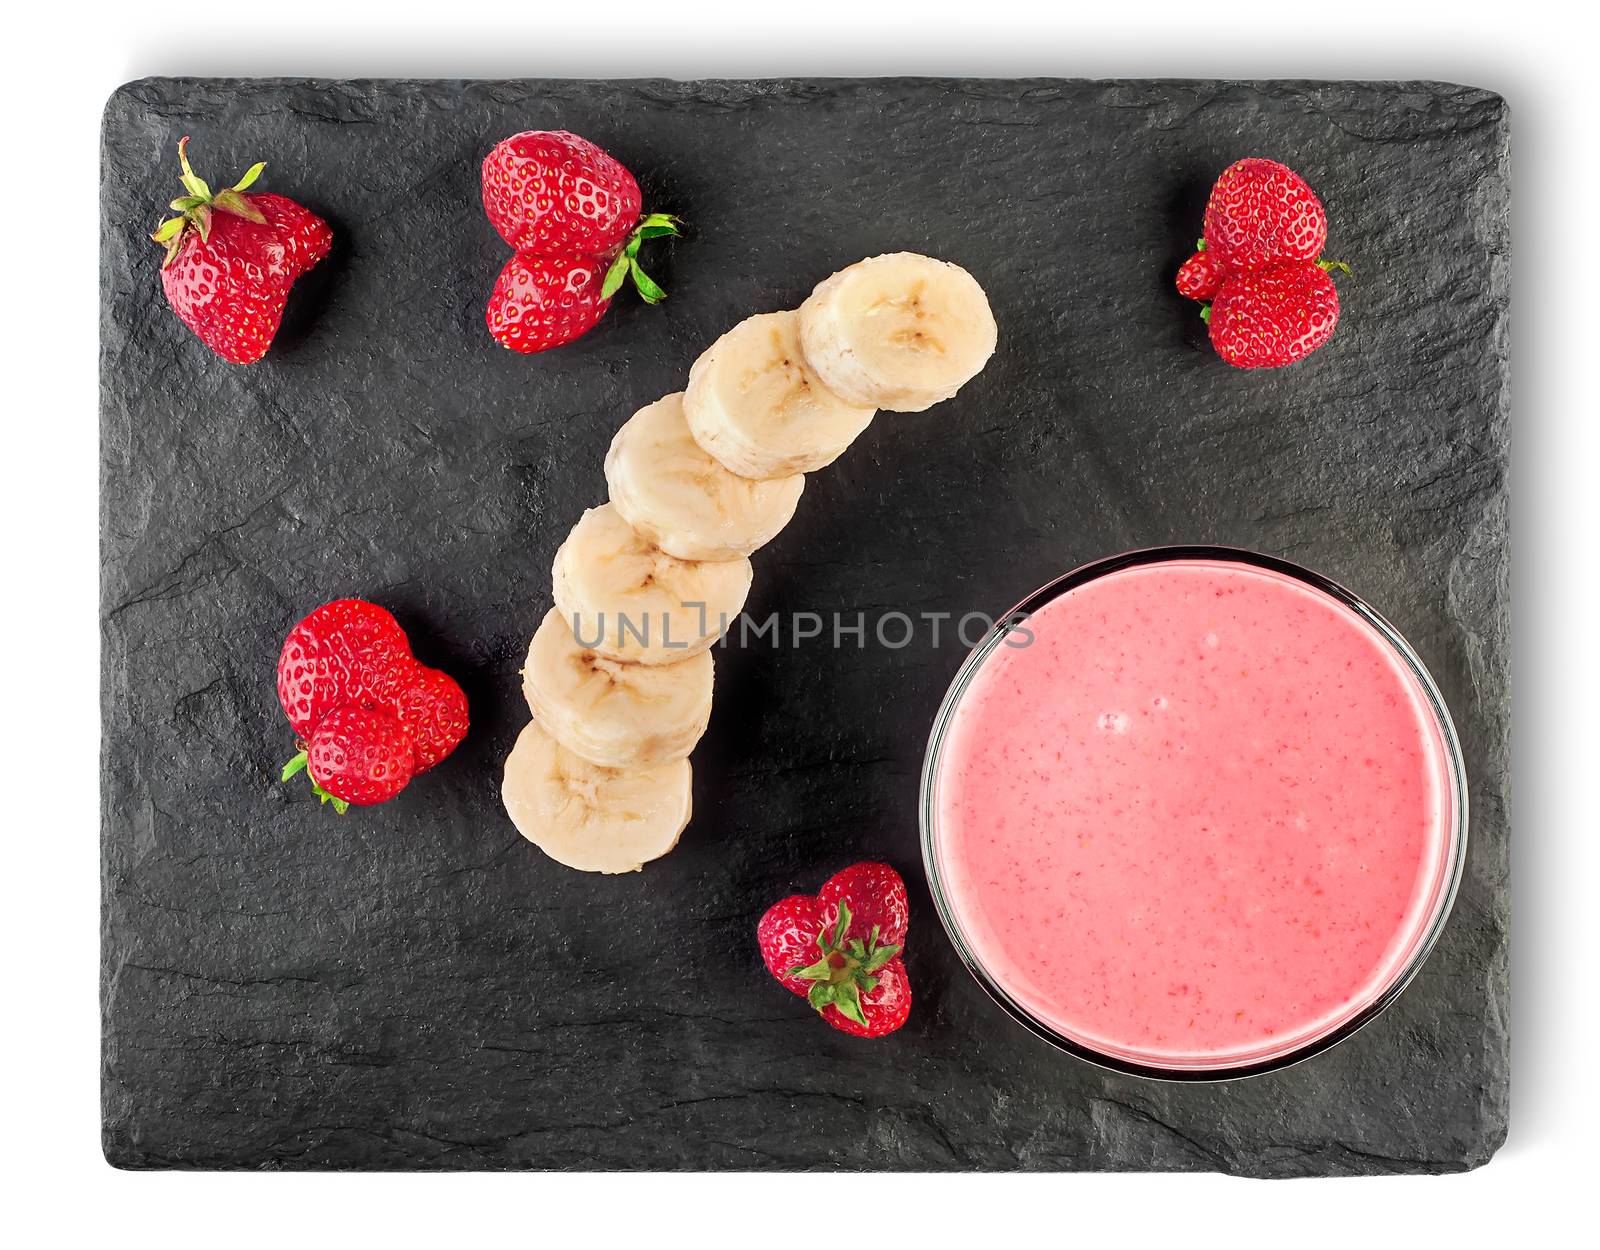 Banana strawberry smoothies by Cipariss